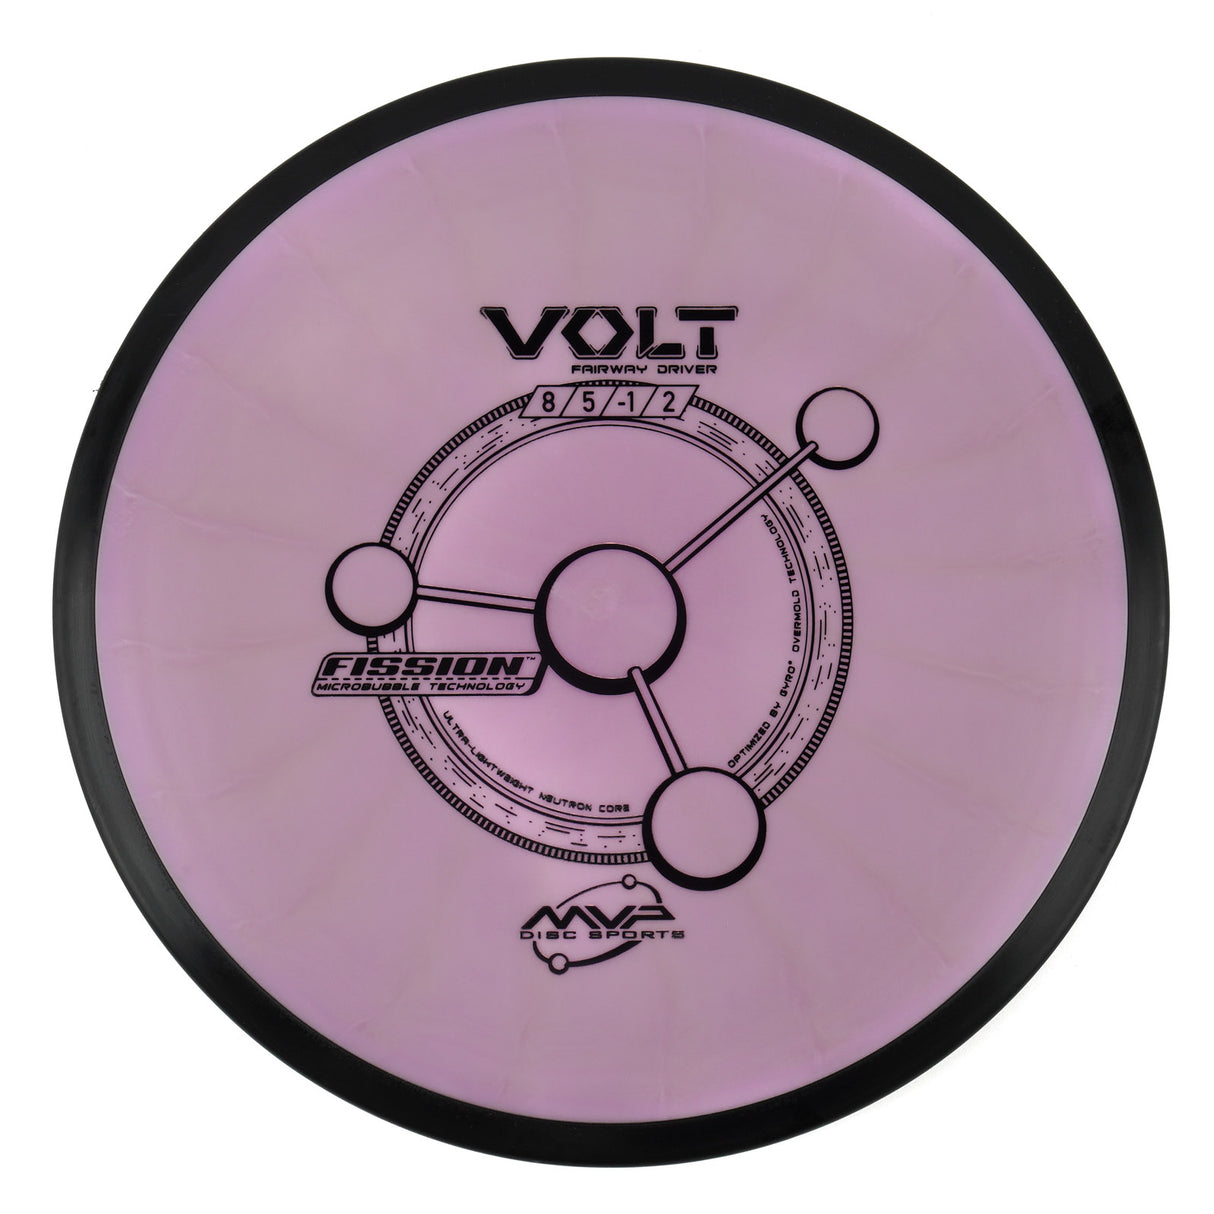 MVP Volt - Fission 173g | Style 0004